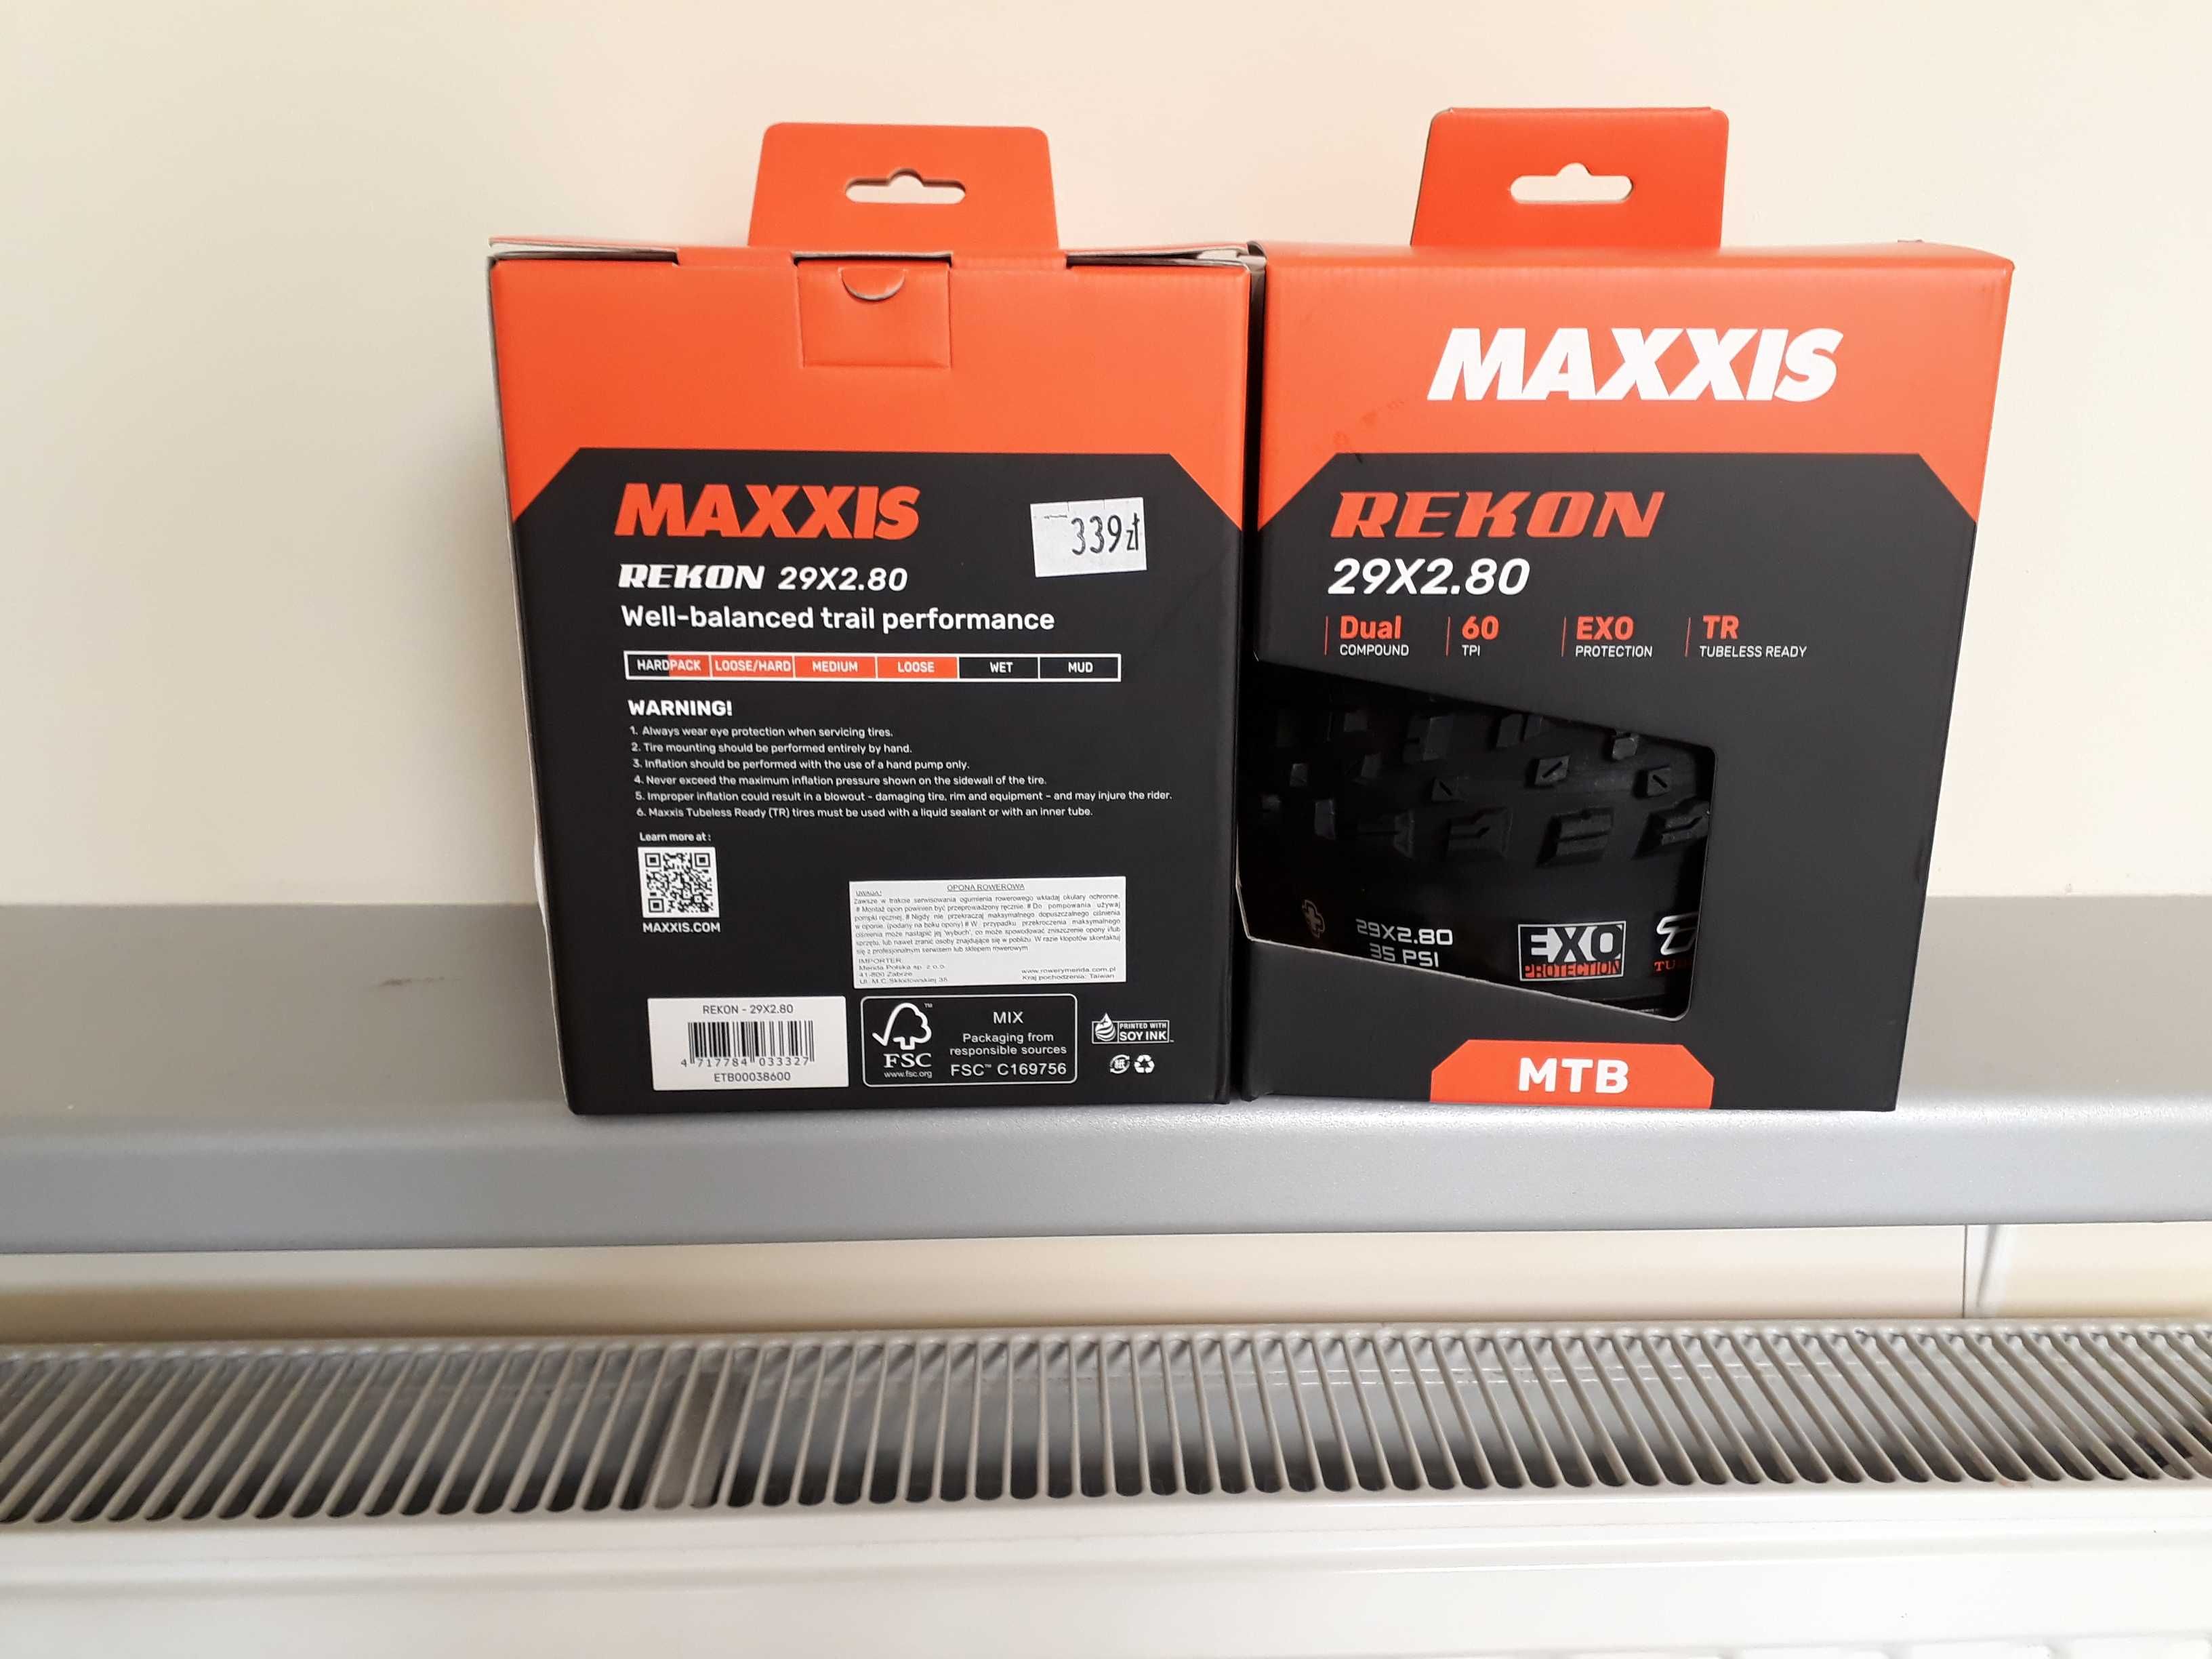 Opona enduro Maxxis Rekon+ 29x2,8 dual 60 TPI EXO